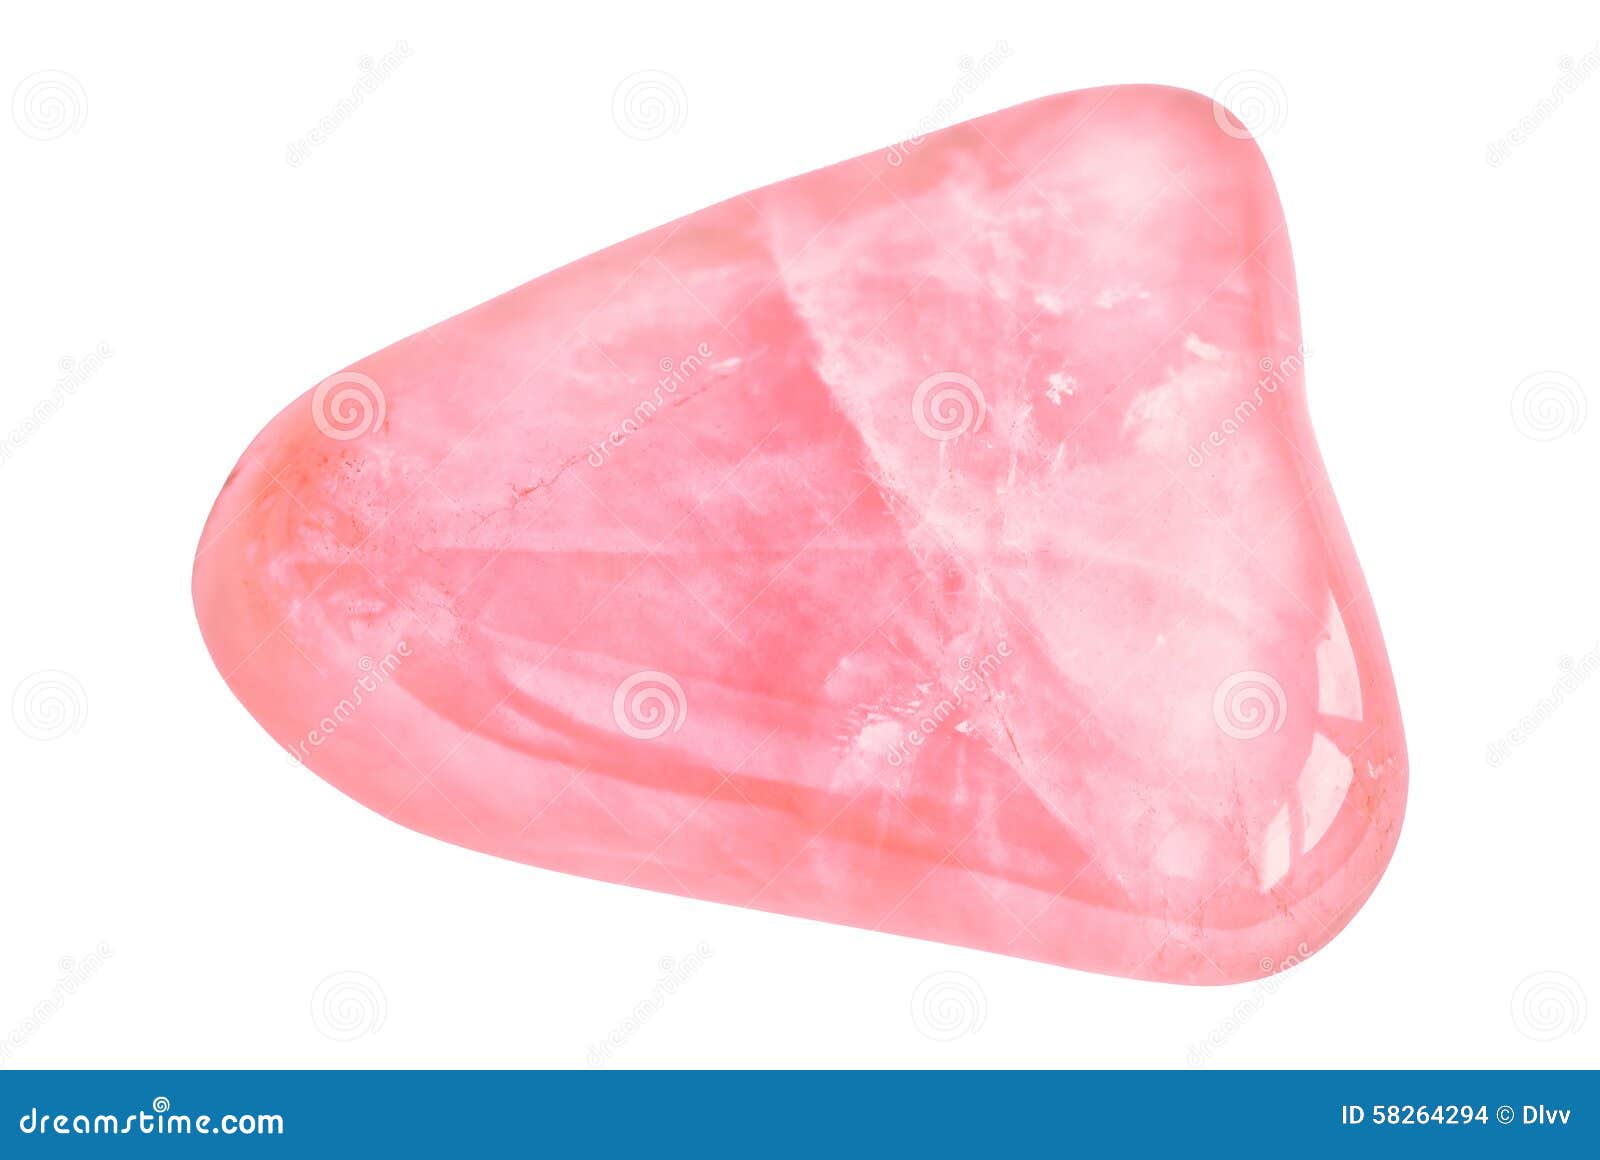 rose (pale pink) quartz gemstone